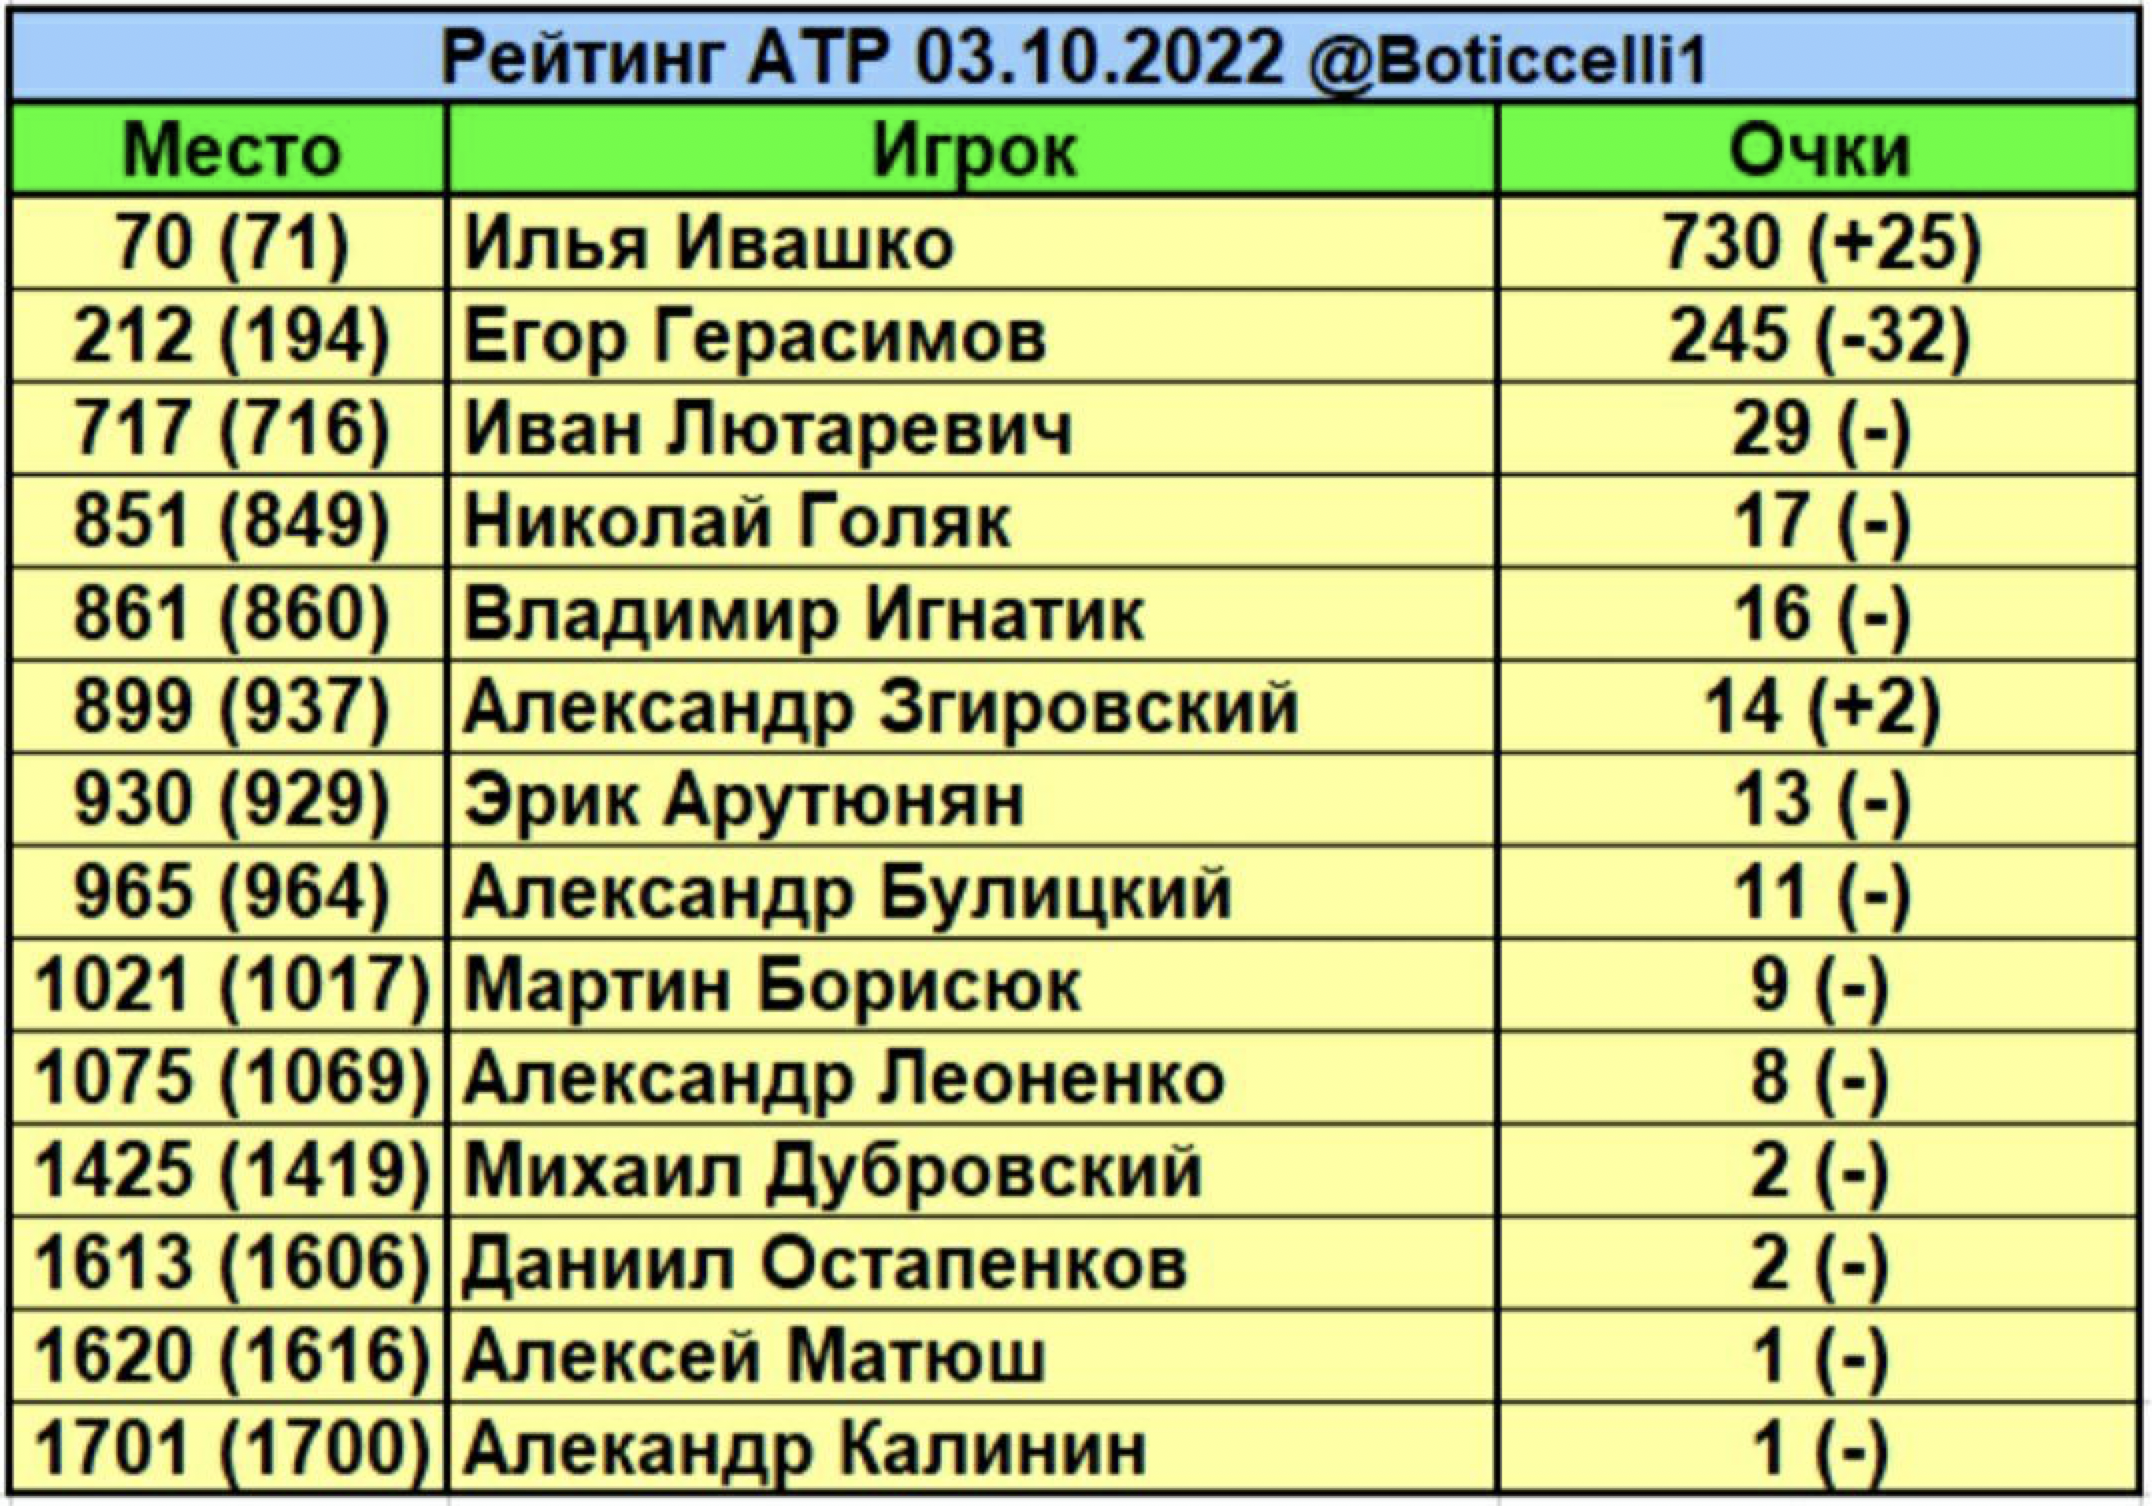 Рейтинг АТП. Рейтинг ATP. Теннис рейтинг. Рейтинг АТП по годам.